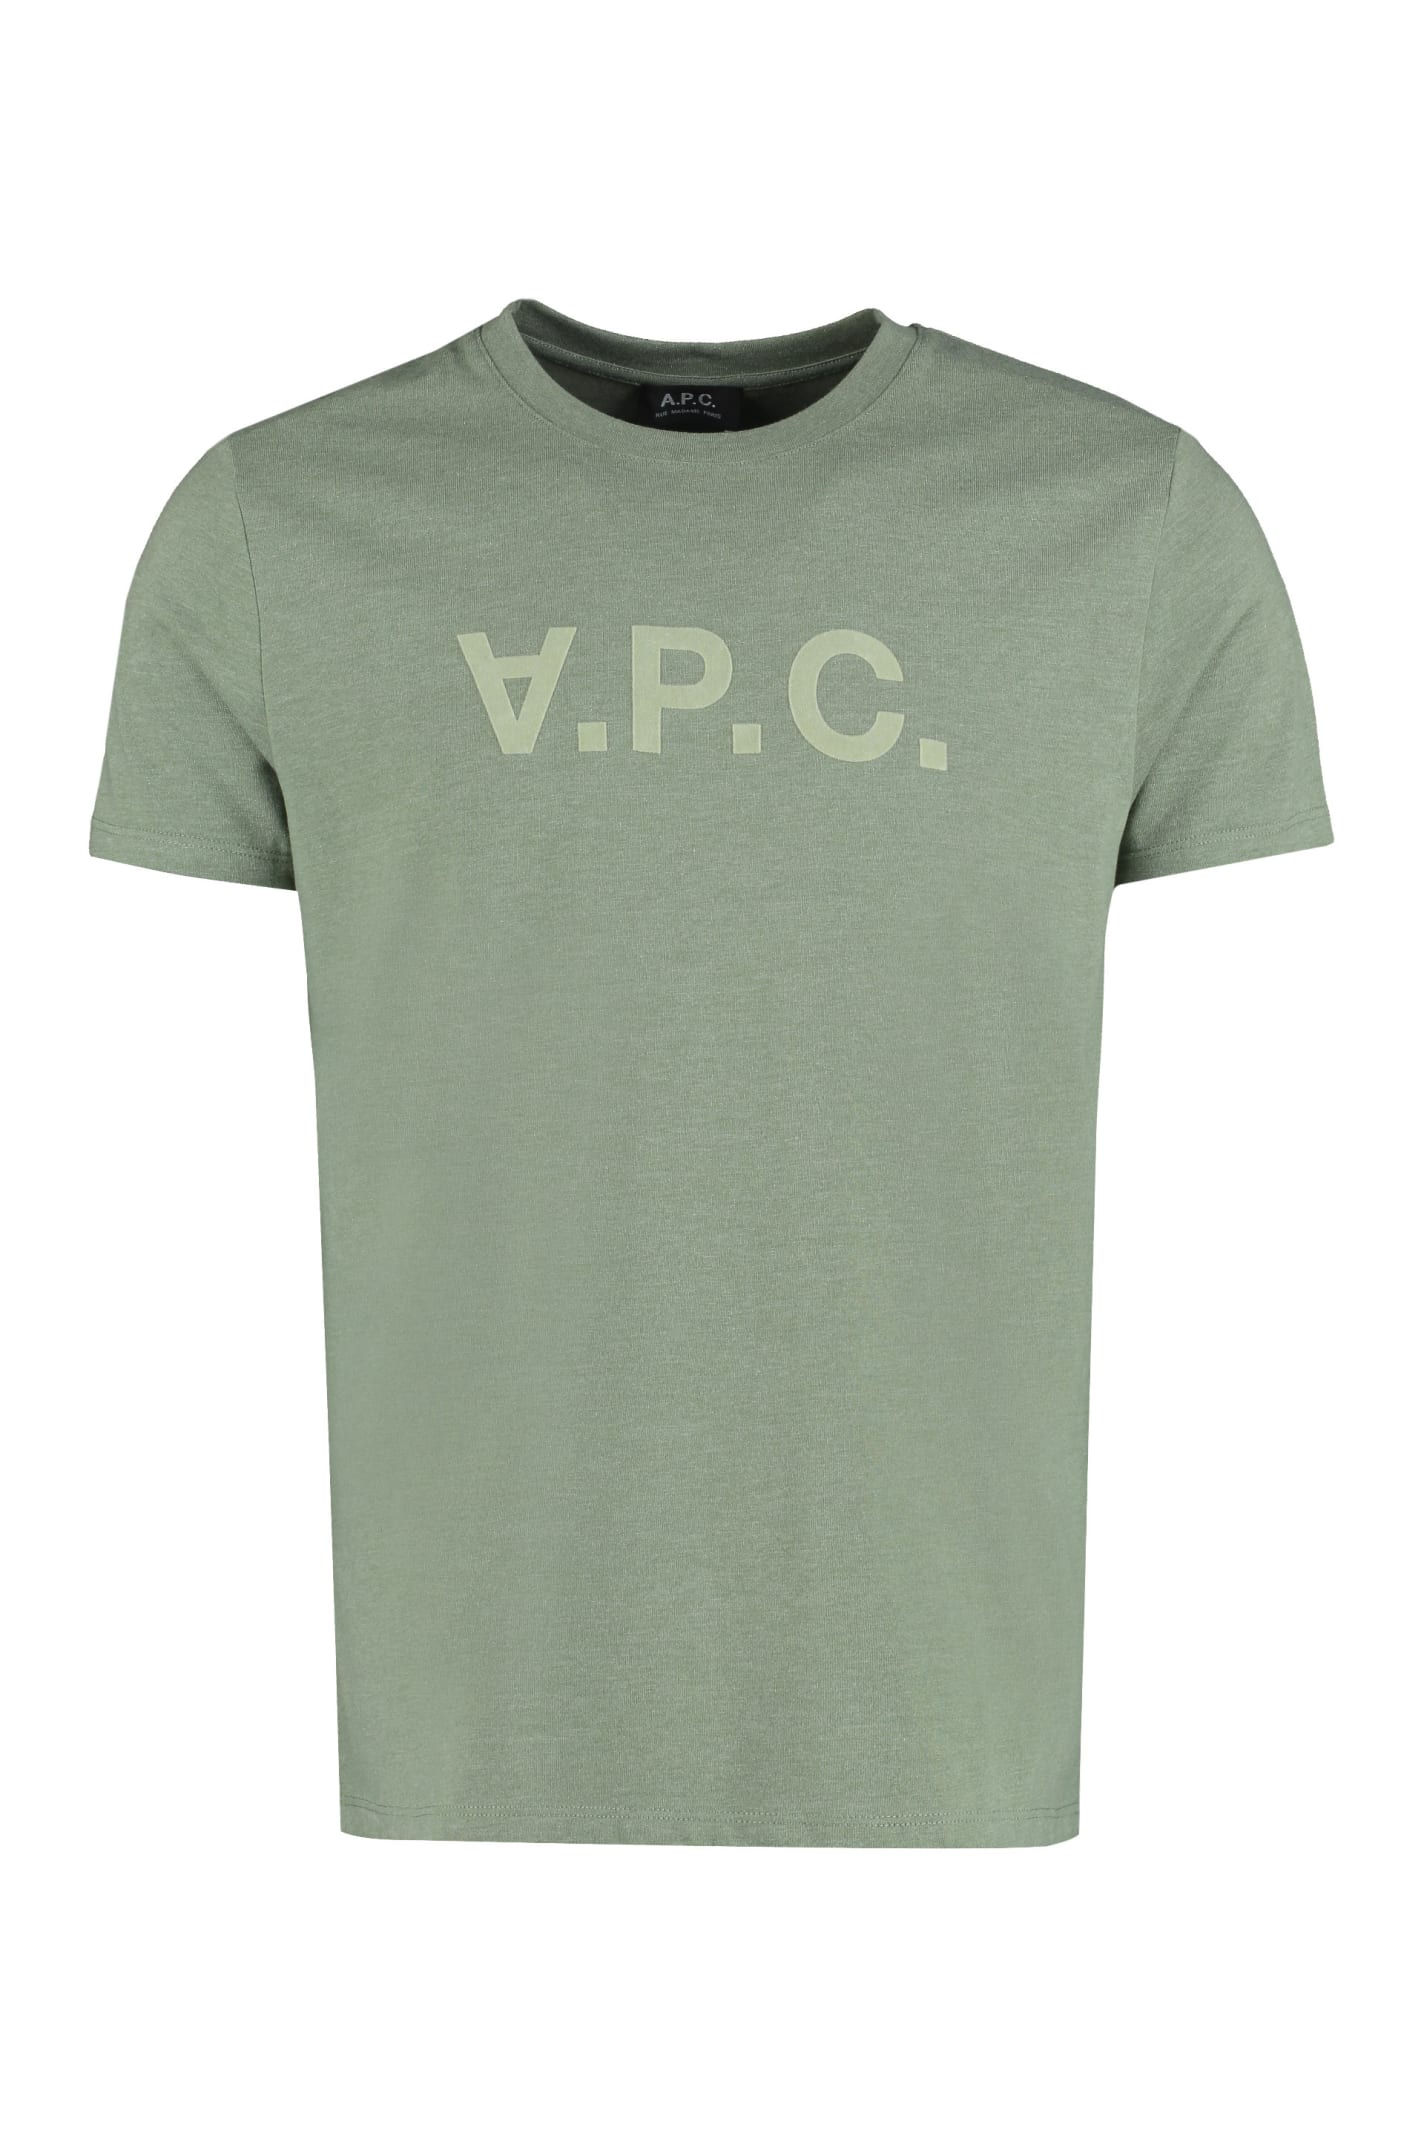 A.P.C. Logo Print Crew-neck T-shirt